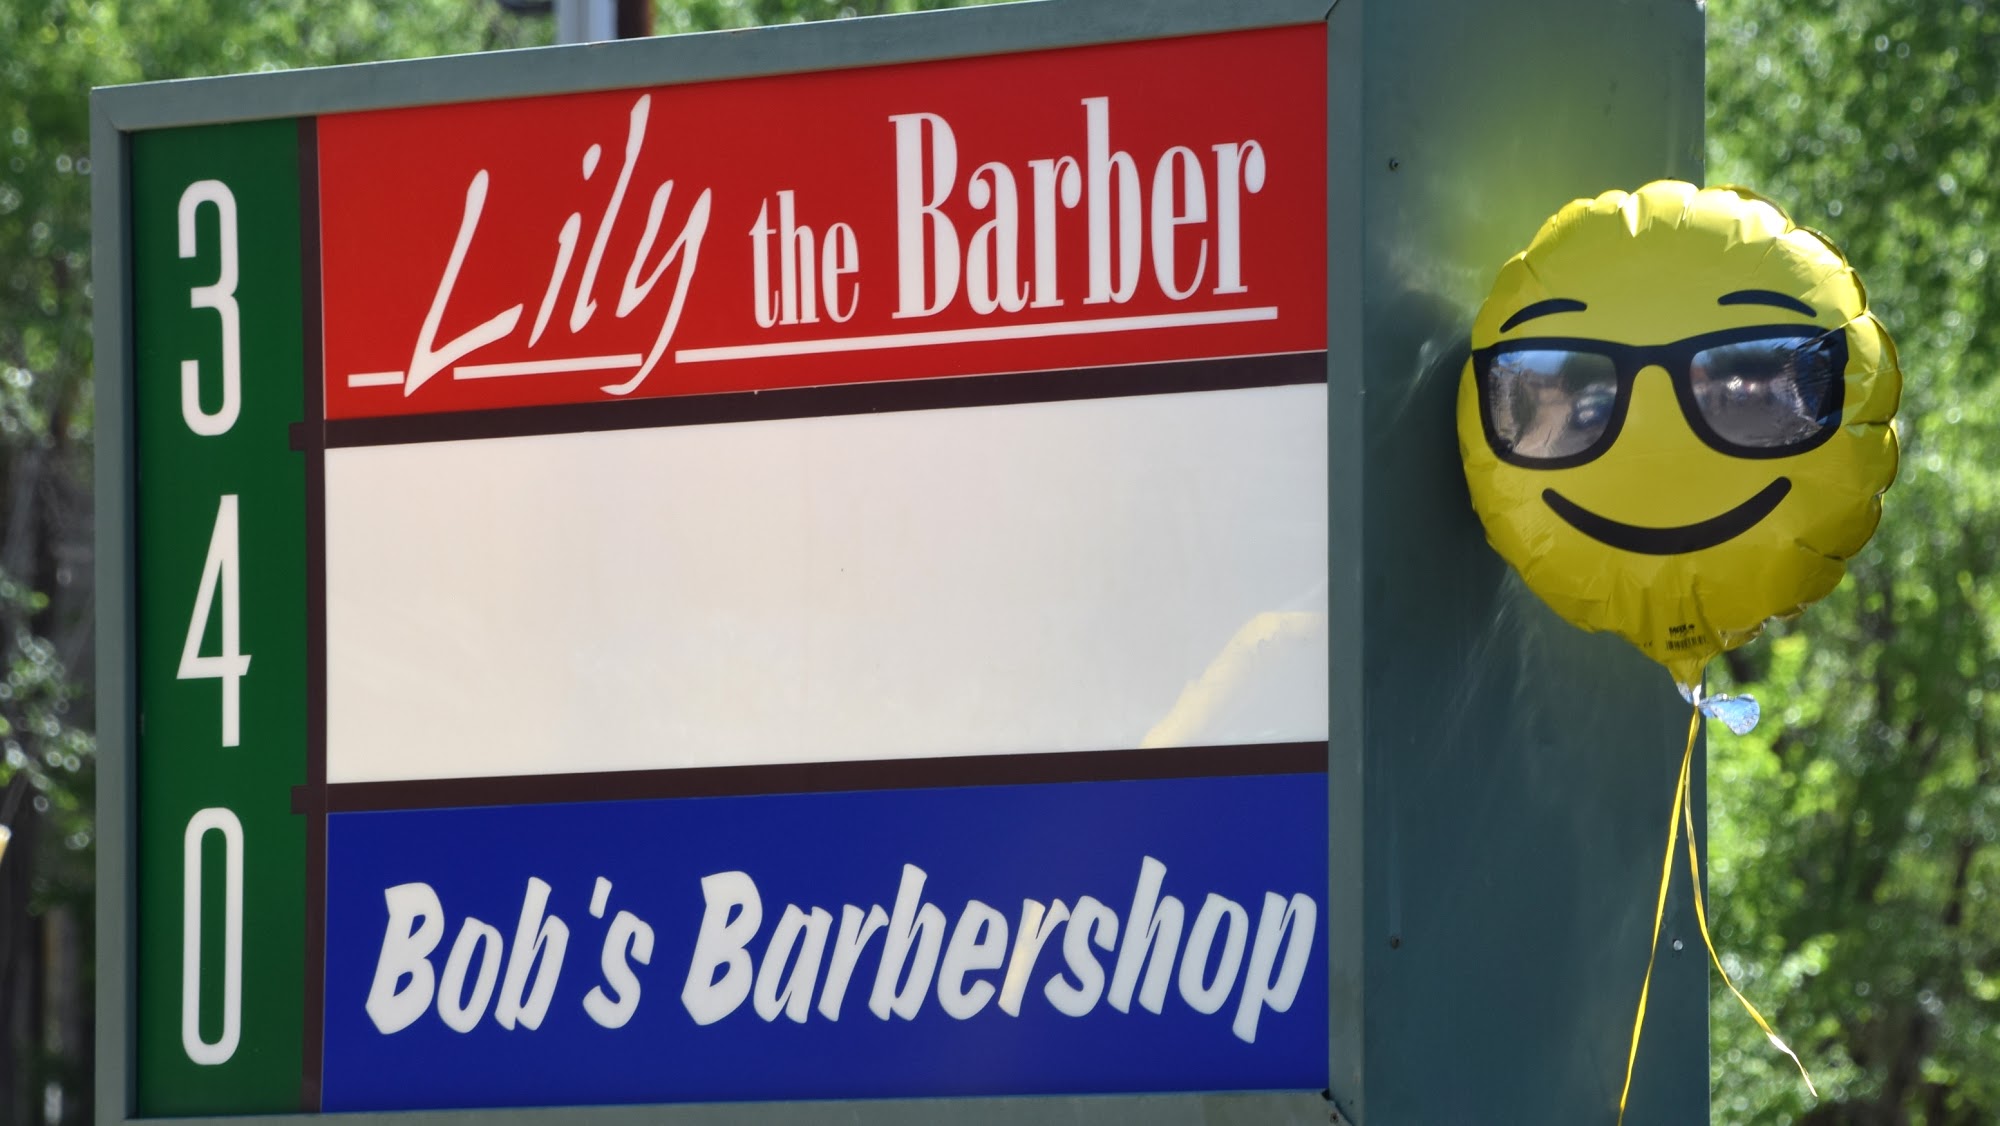 Bob's Barber Shop & Lily the Barber